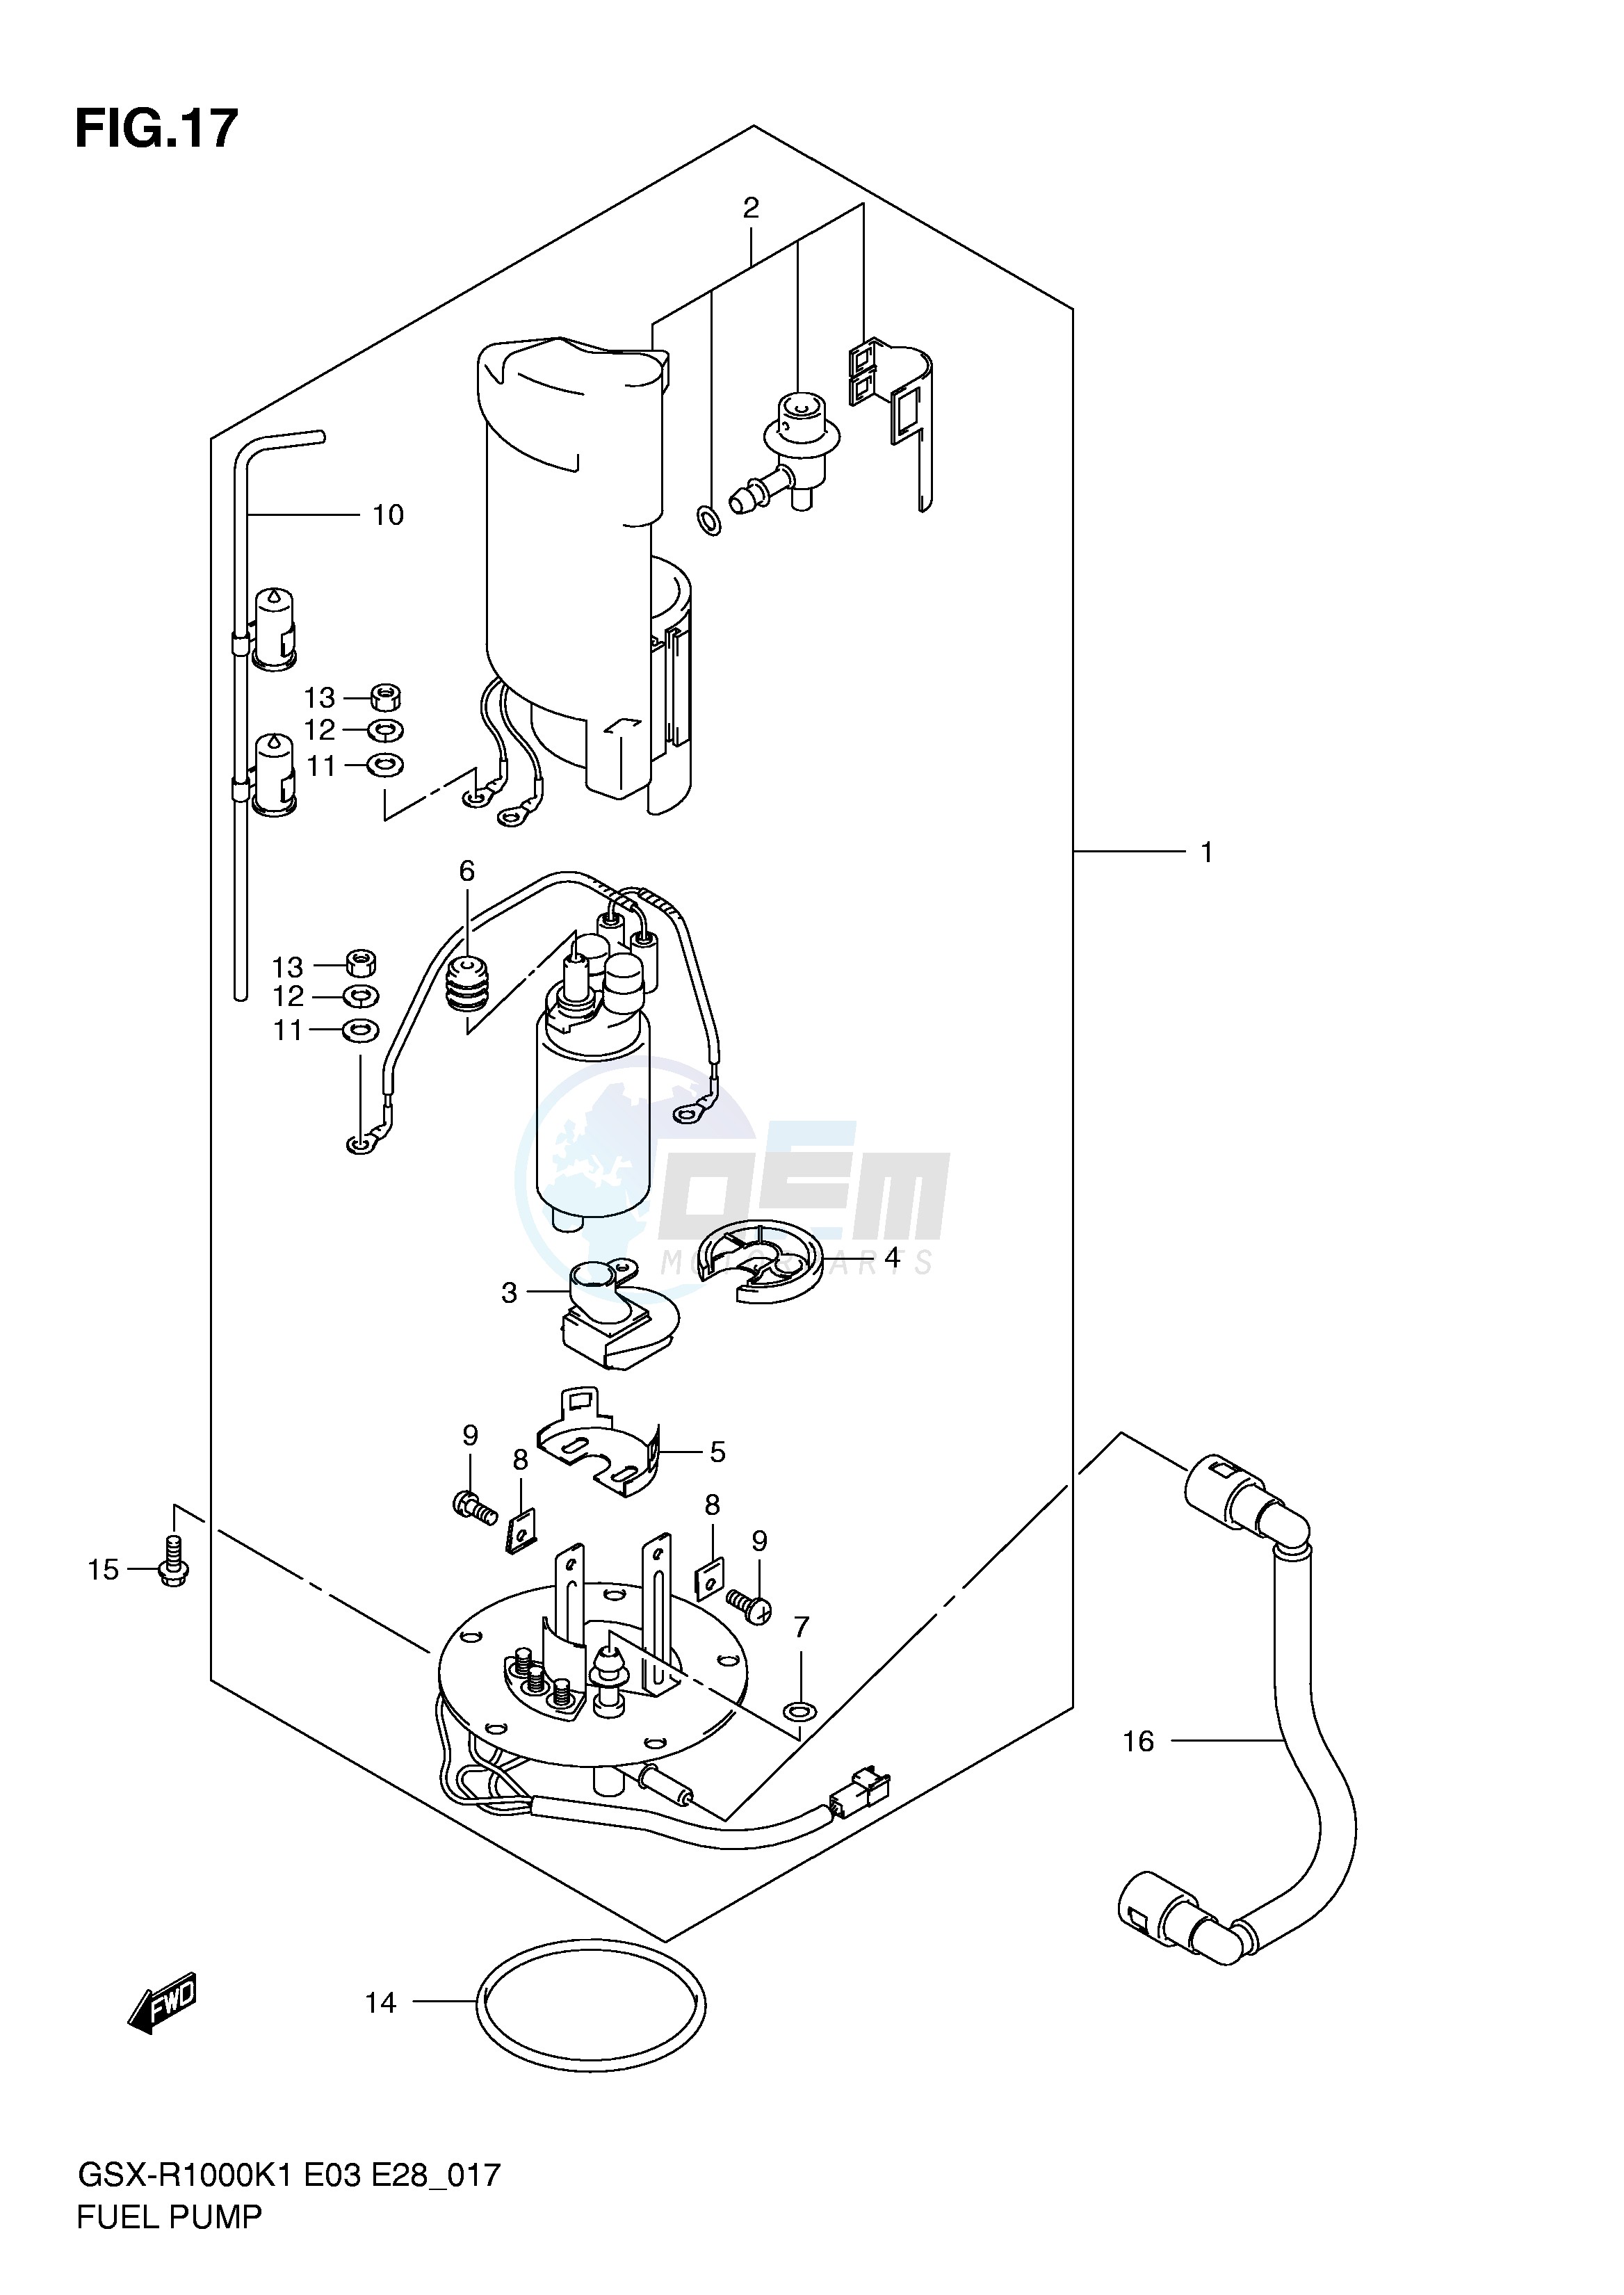 FUEL PUMP (GSX-R1000K1) blueprint